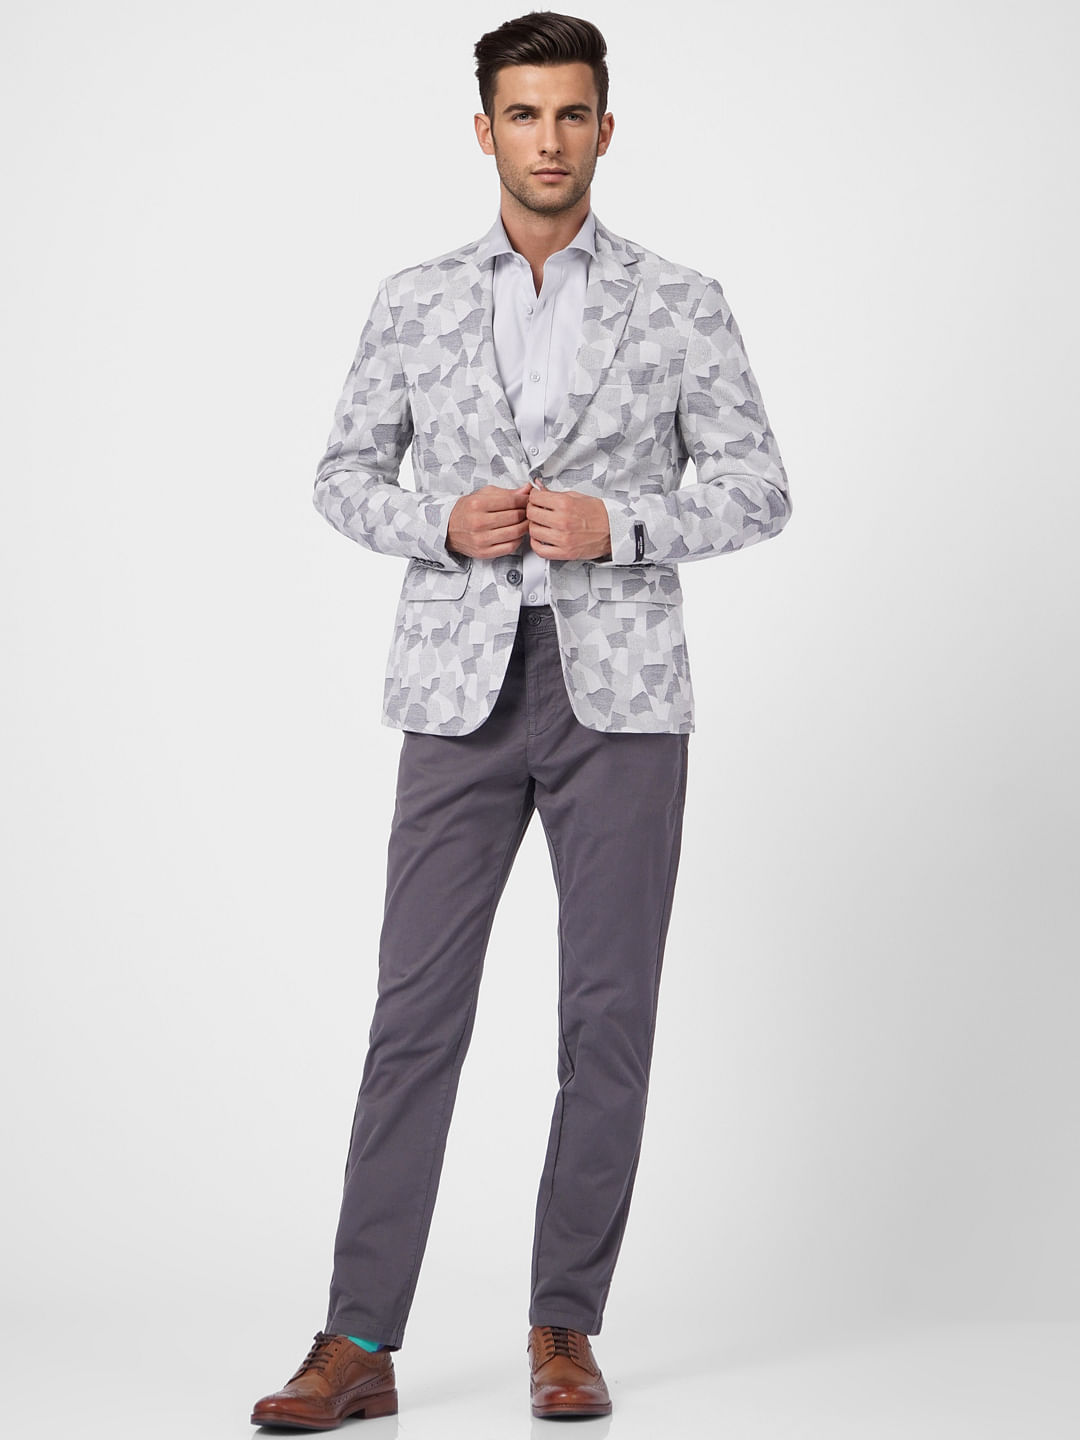 gray khaki  Business casual attire for men Mens outfits Business casual  attire